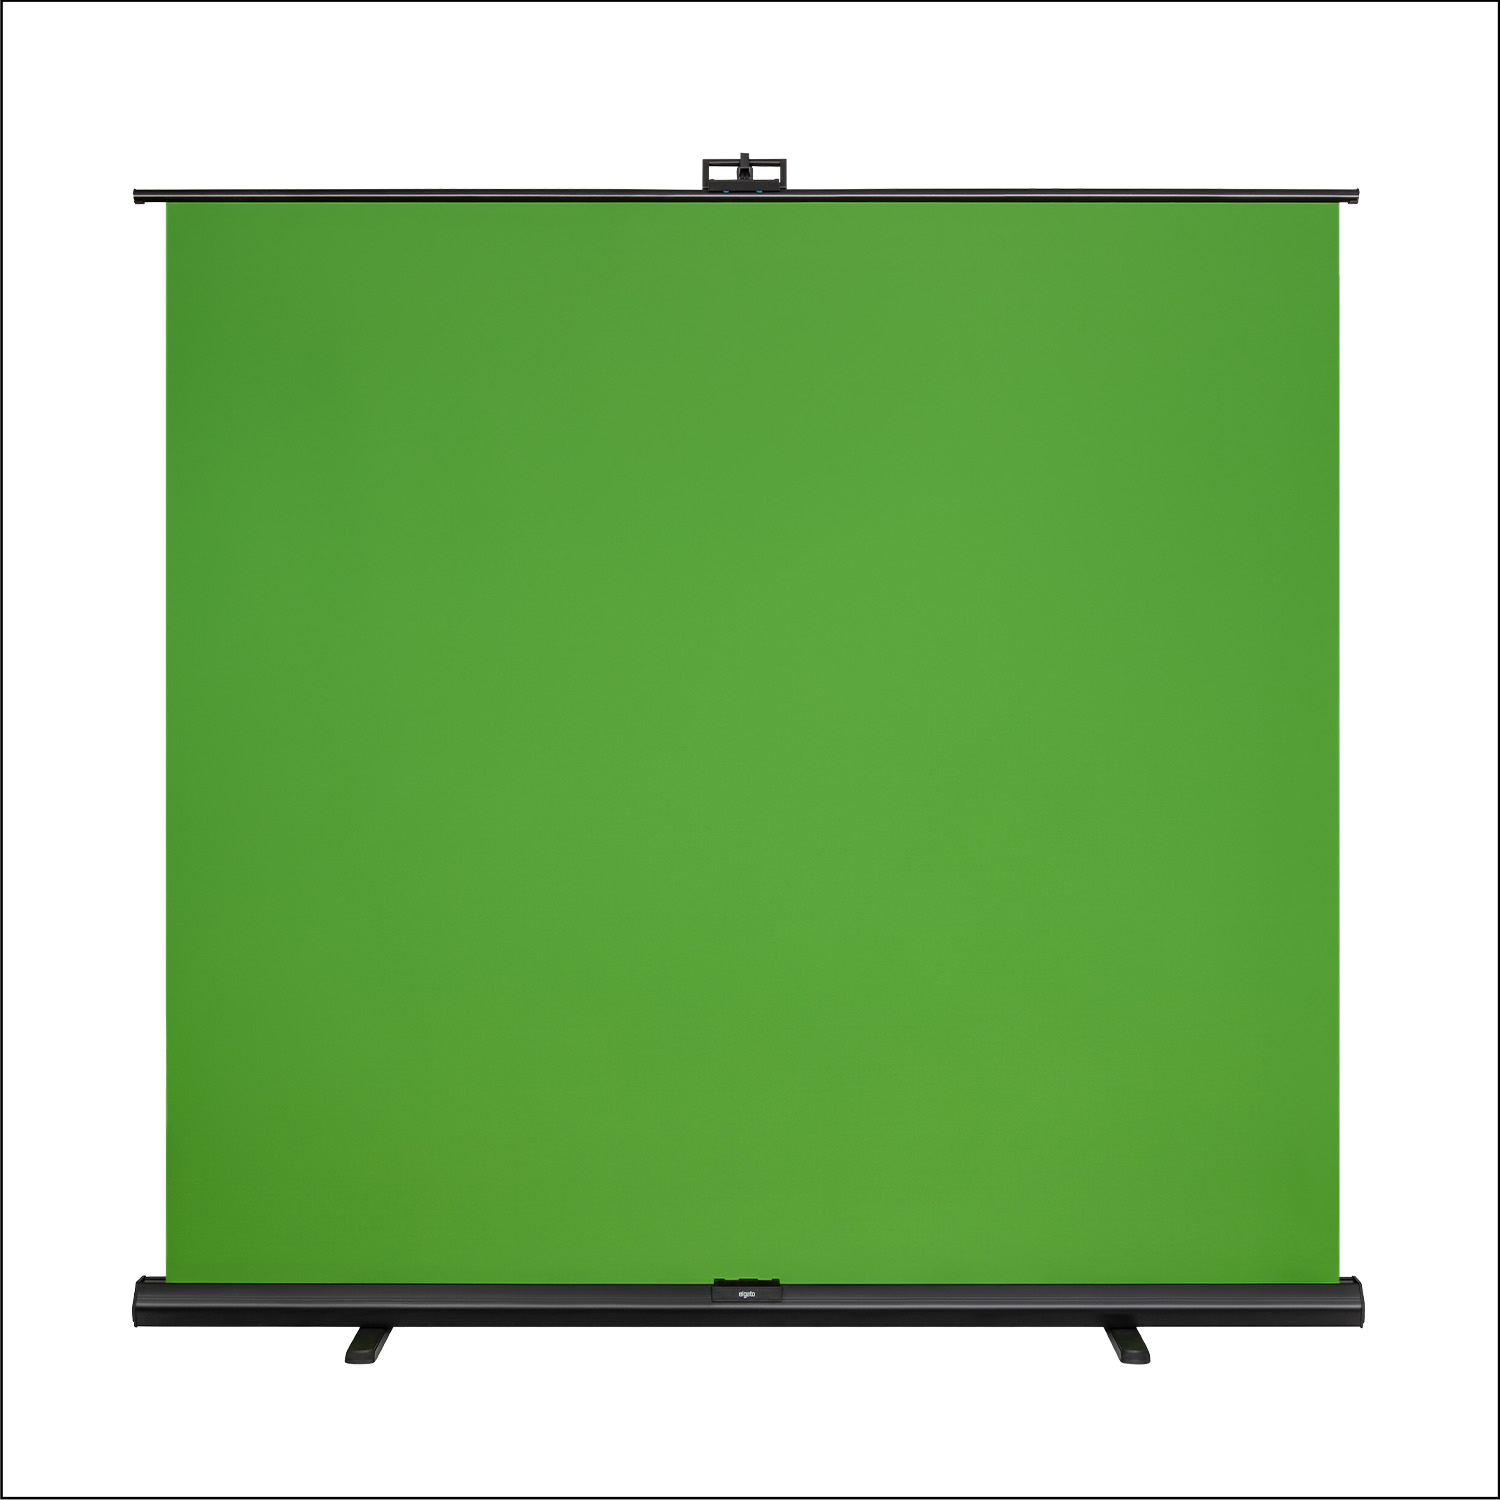 Elgato Green Screen XL グリーンスクリーン 10GBG9901 エルガト 